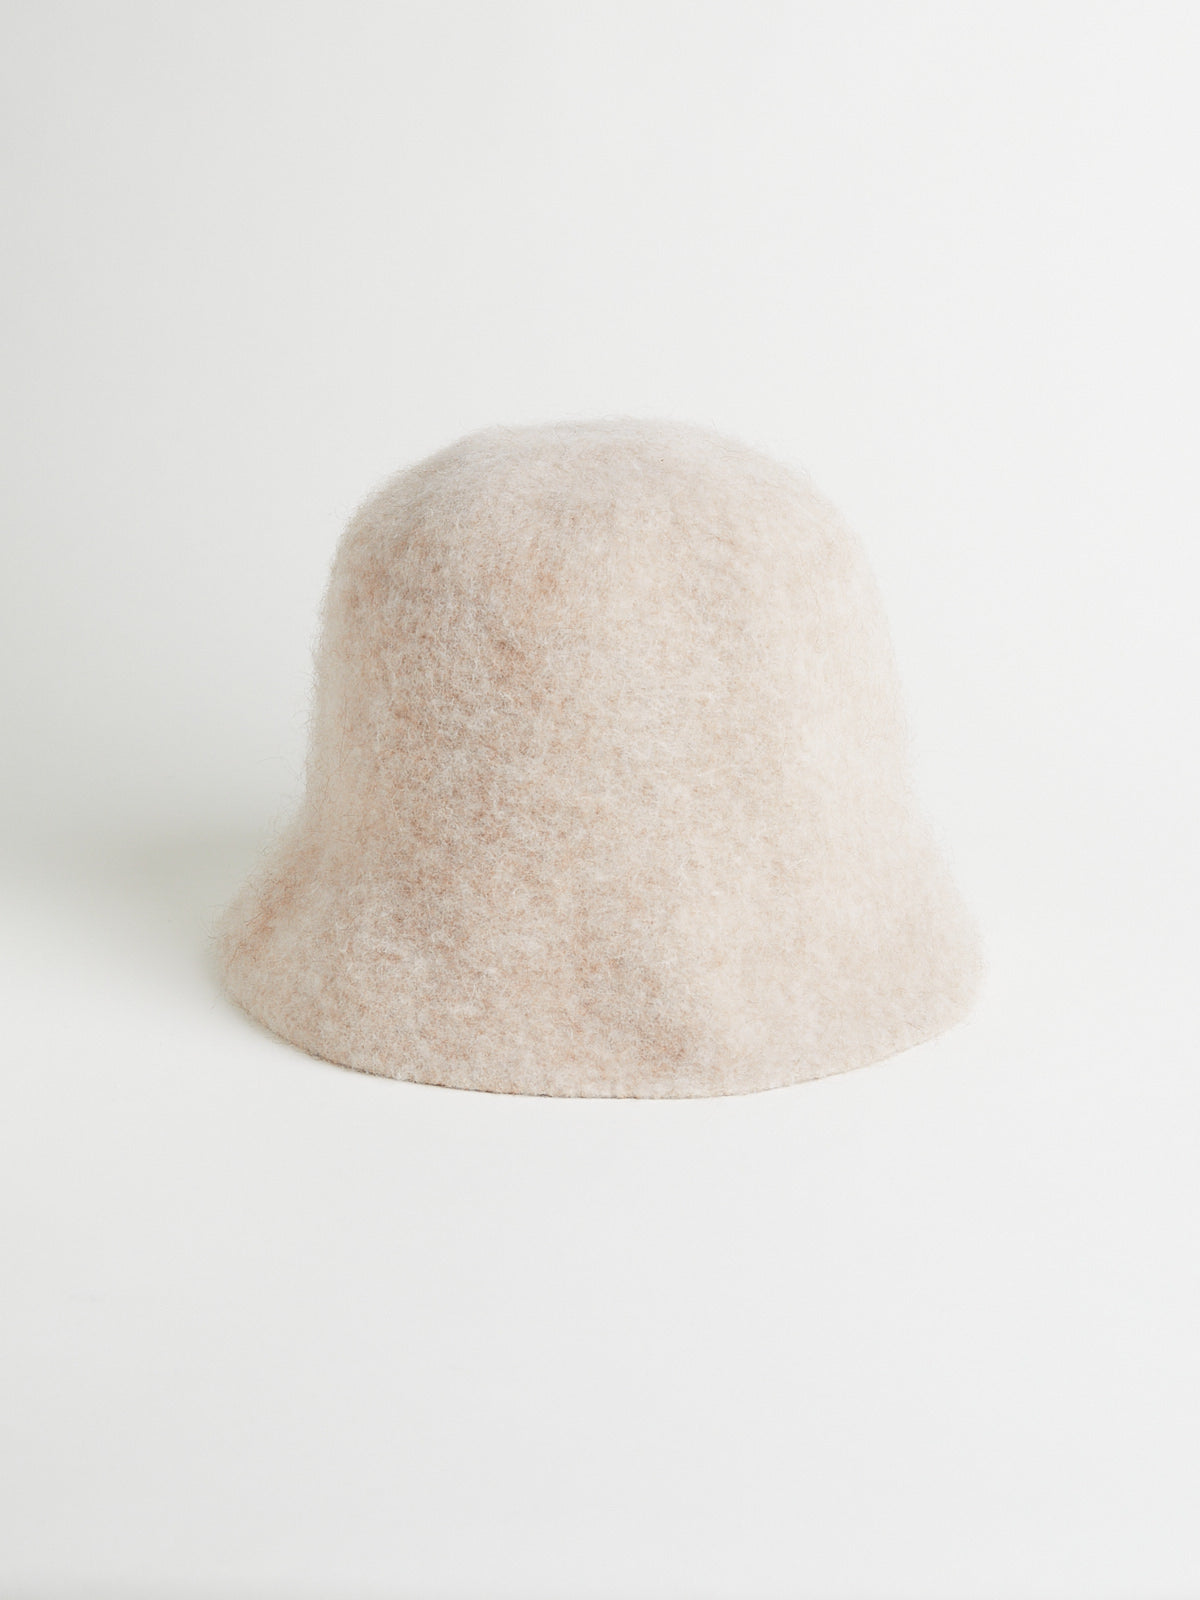 Bell Hat in Camel/Natural